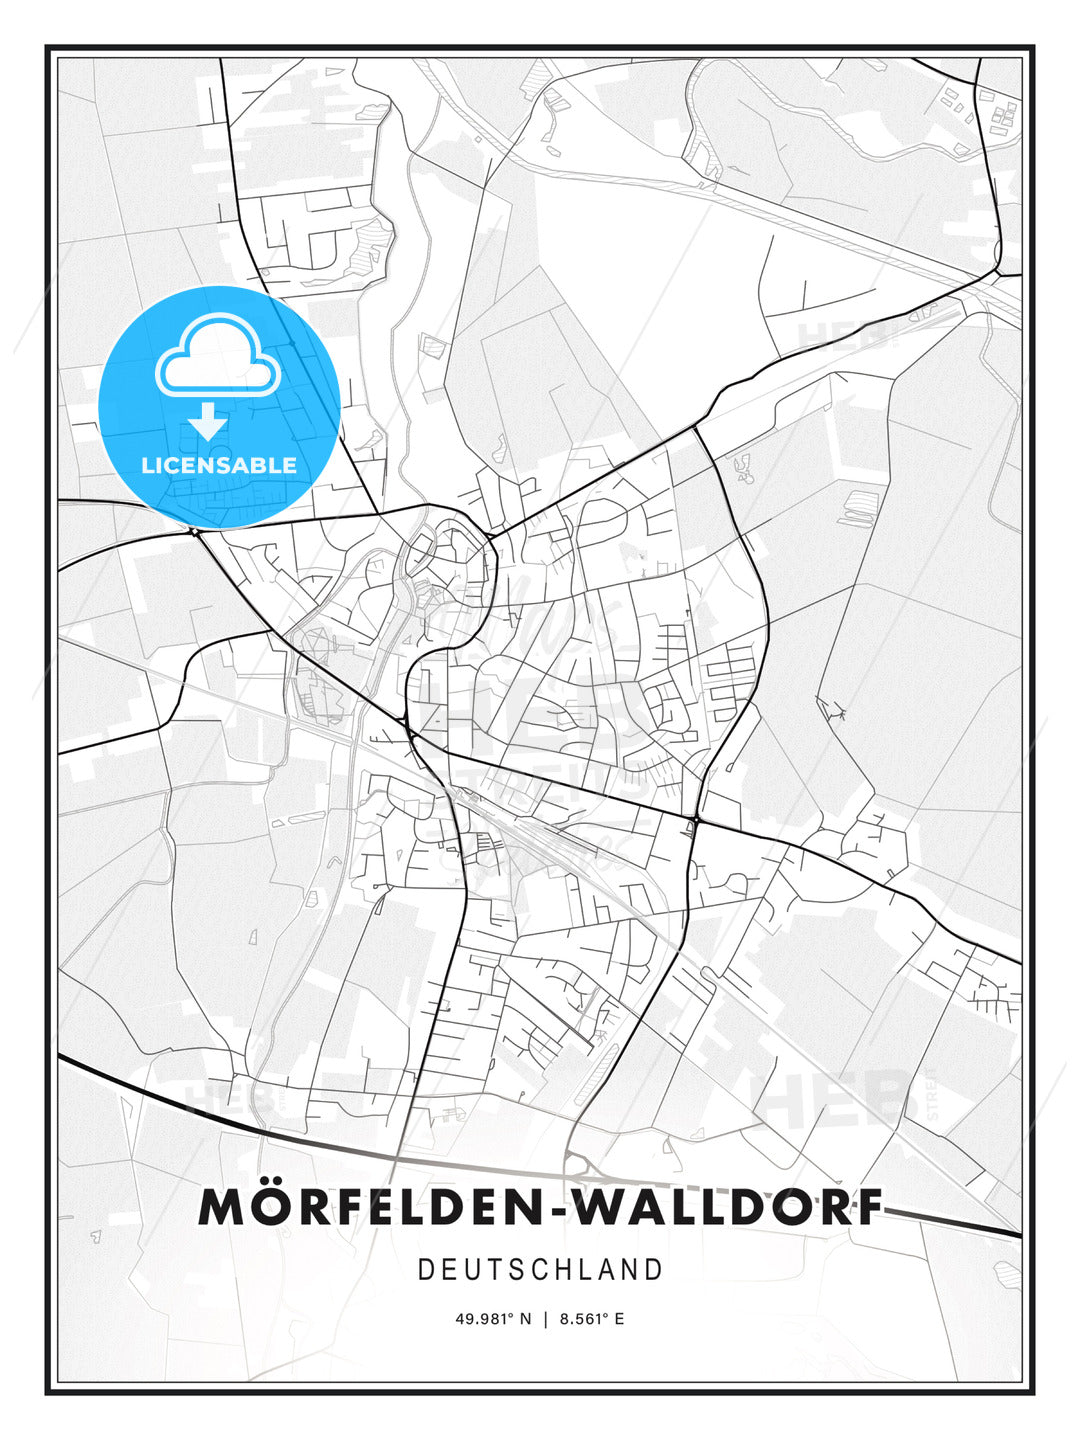 MÖRFELDEN-WALLDORF / Morfelden-Walldorf, Germany, Modern Print Template in Various Formats - HEBSTREITS Sketches